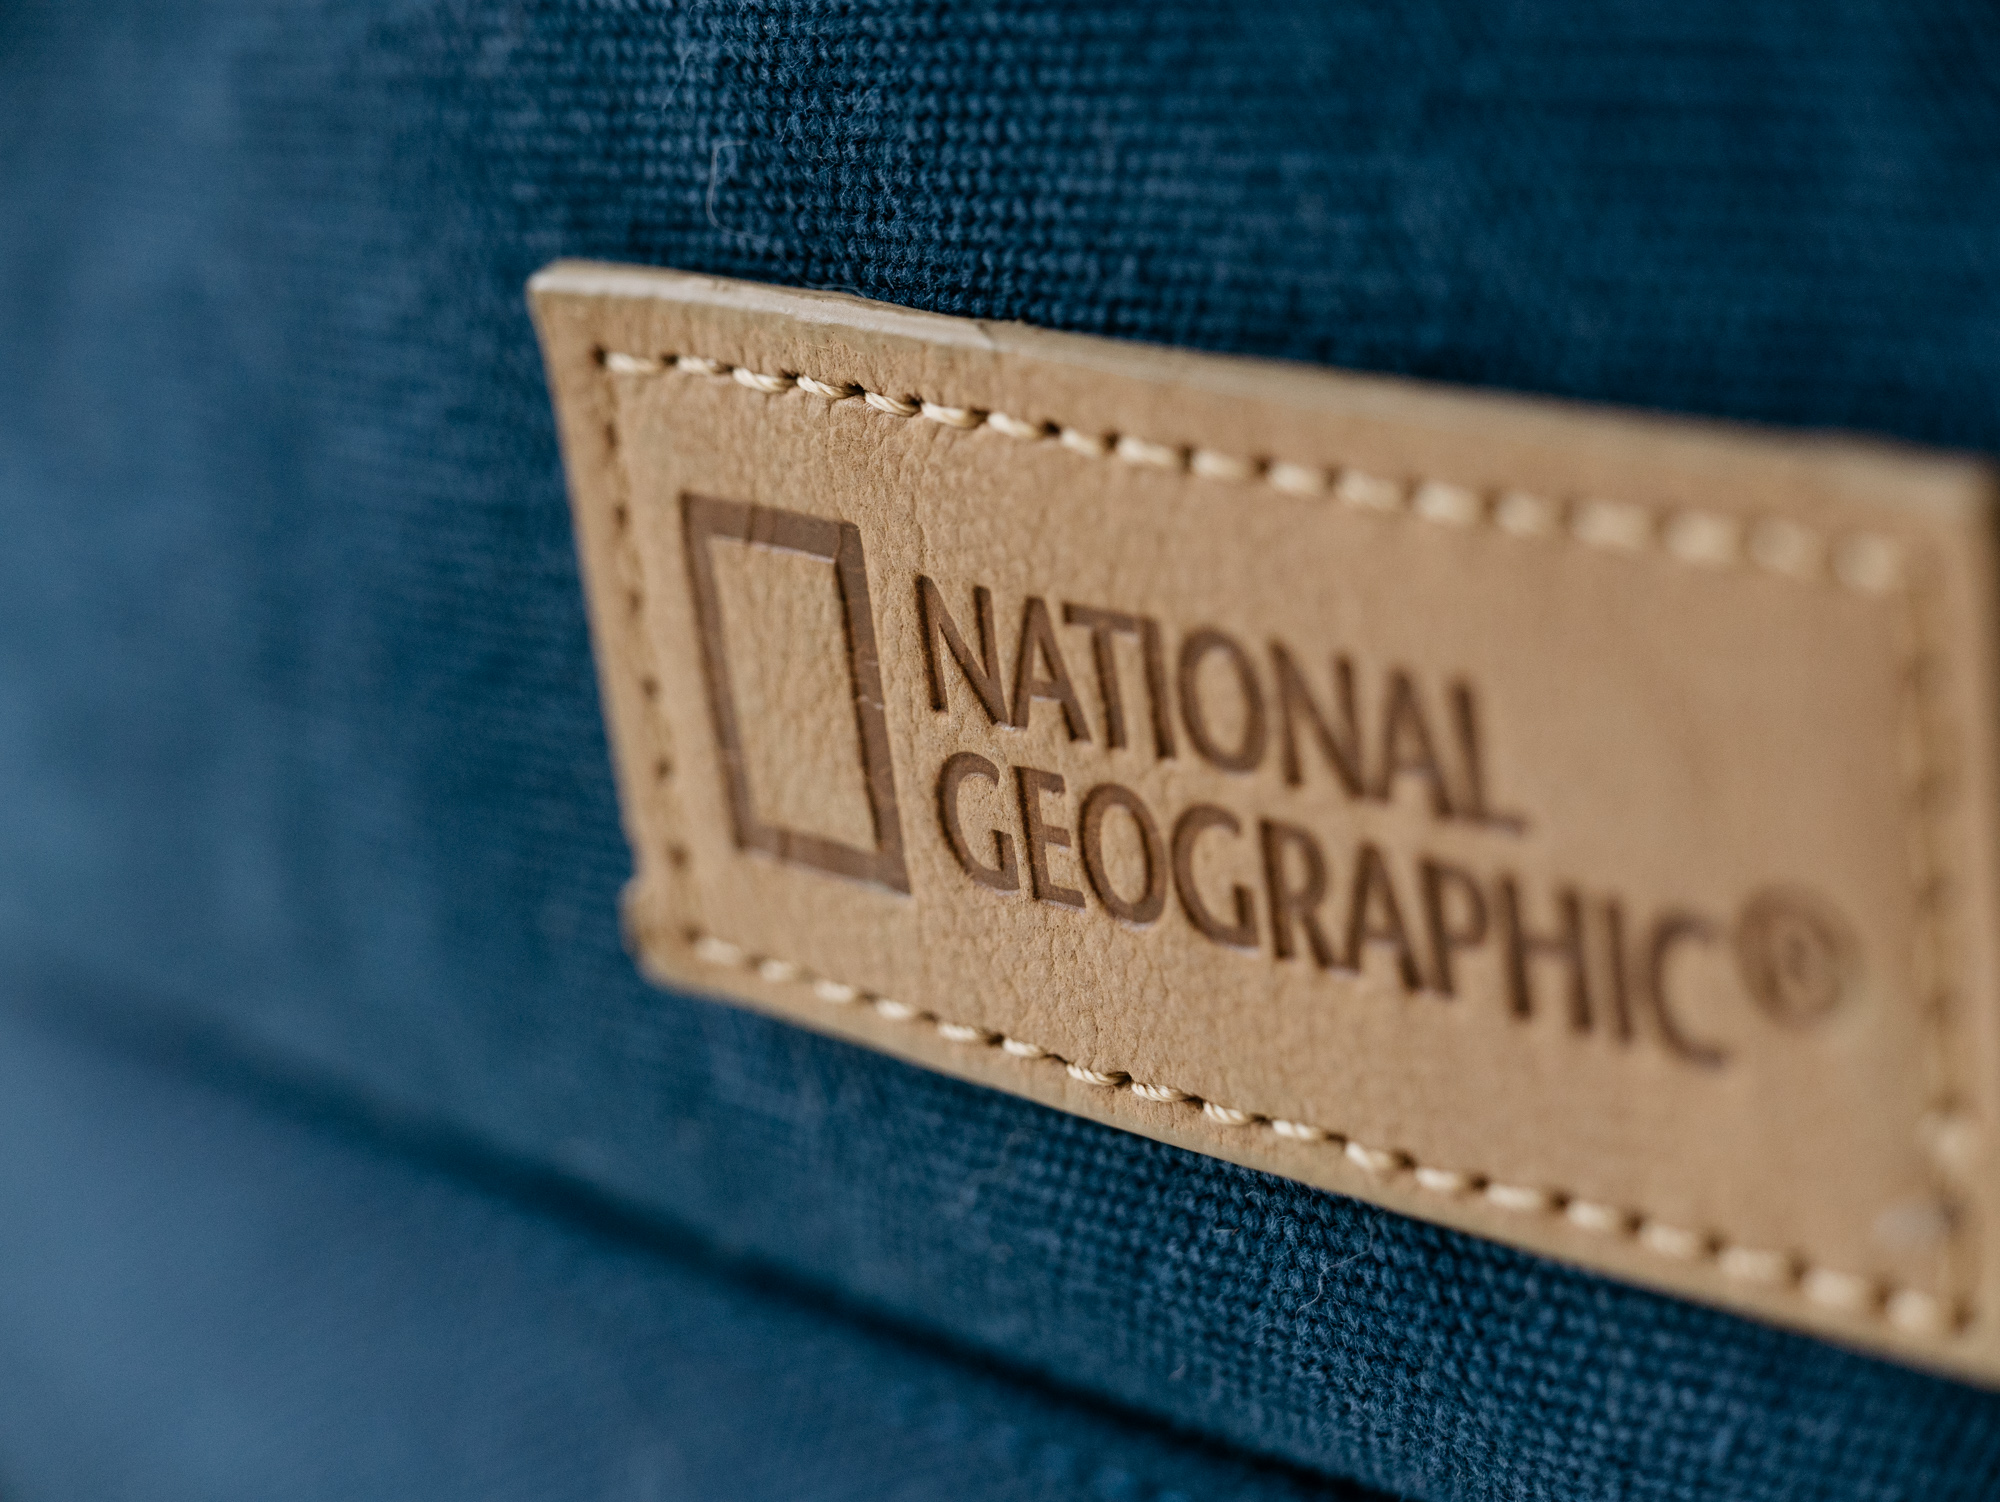 Bag Review: National Geographic MC5350 / Steve Losh